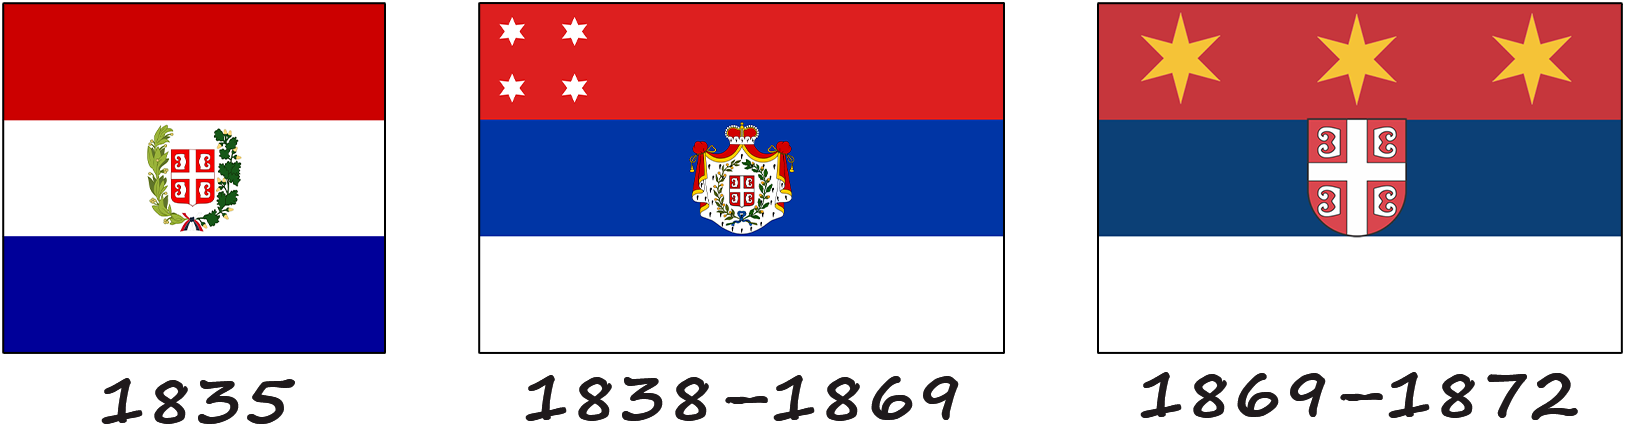 Historia de la bandera serbia